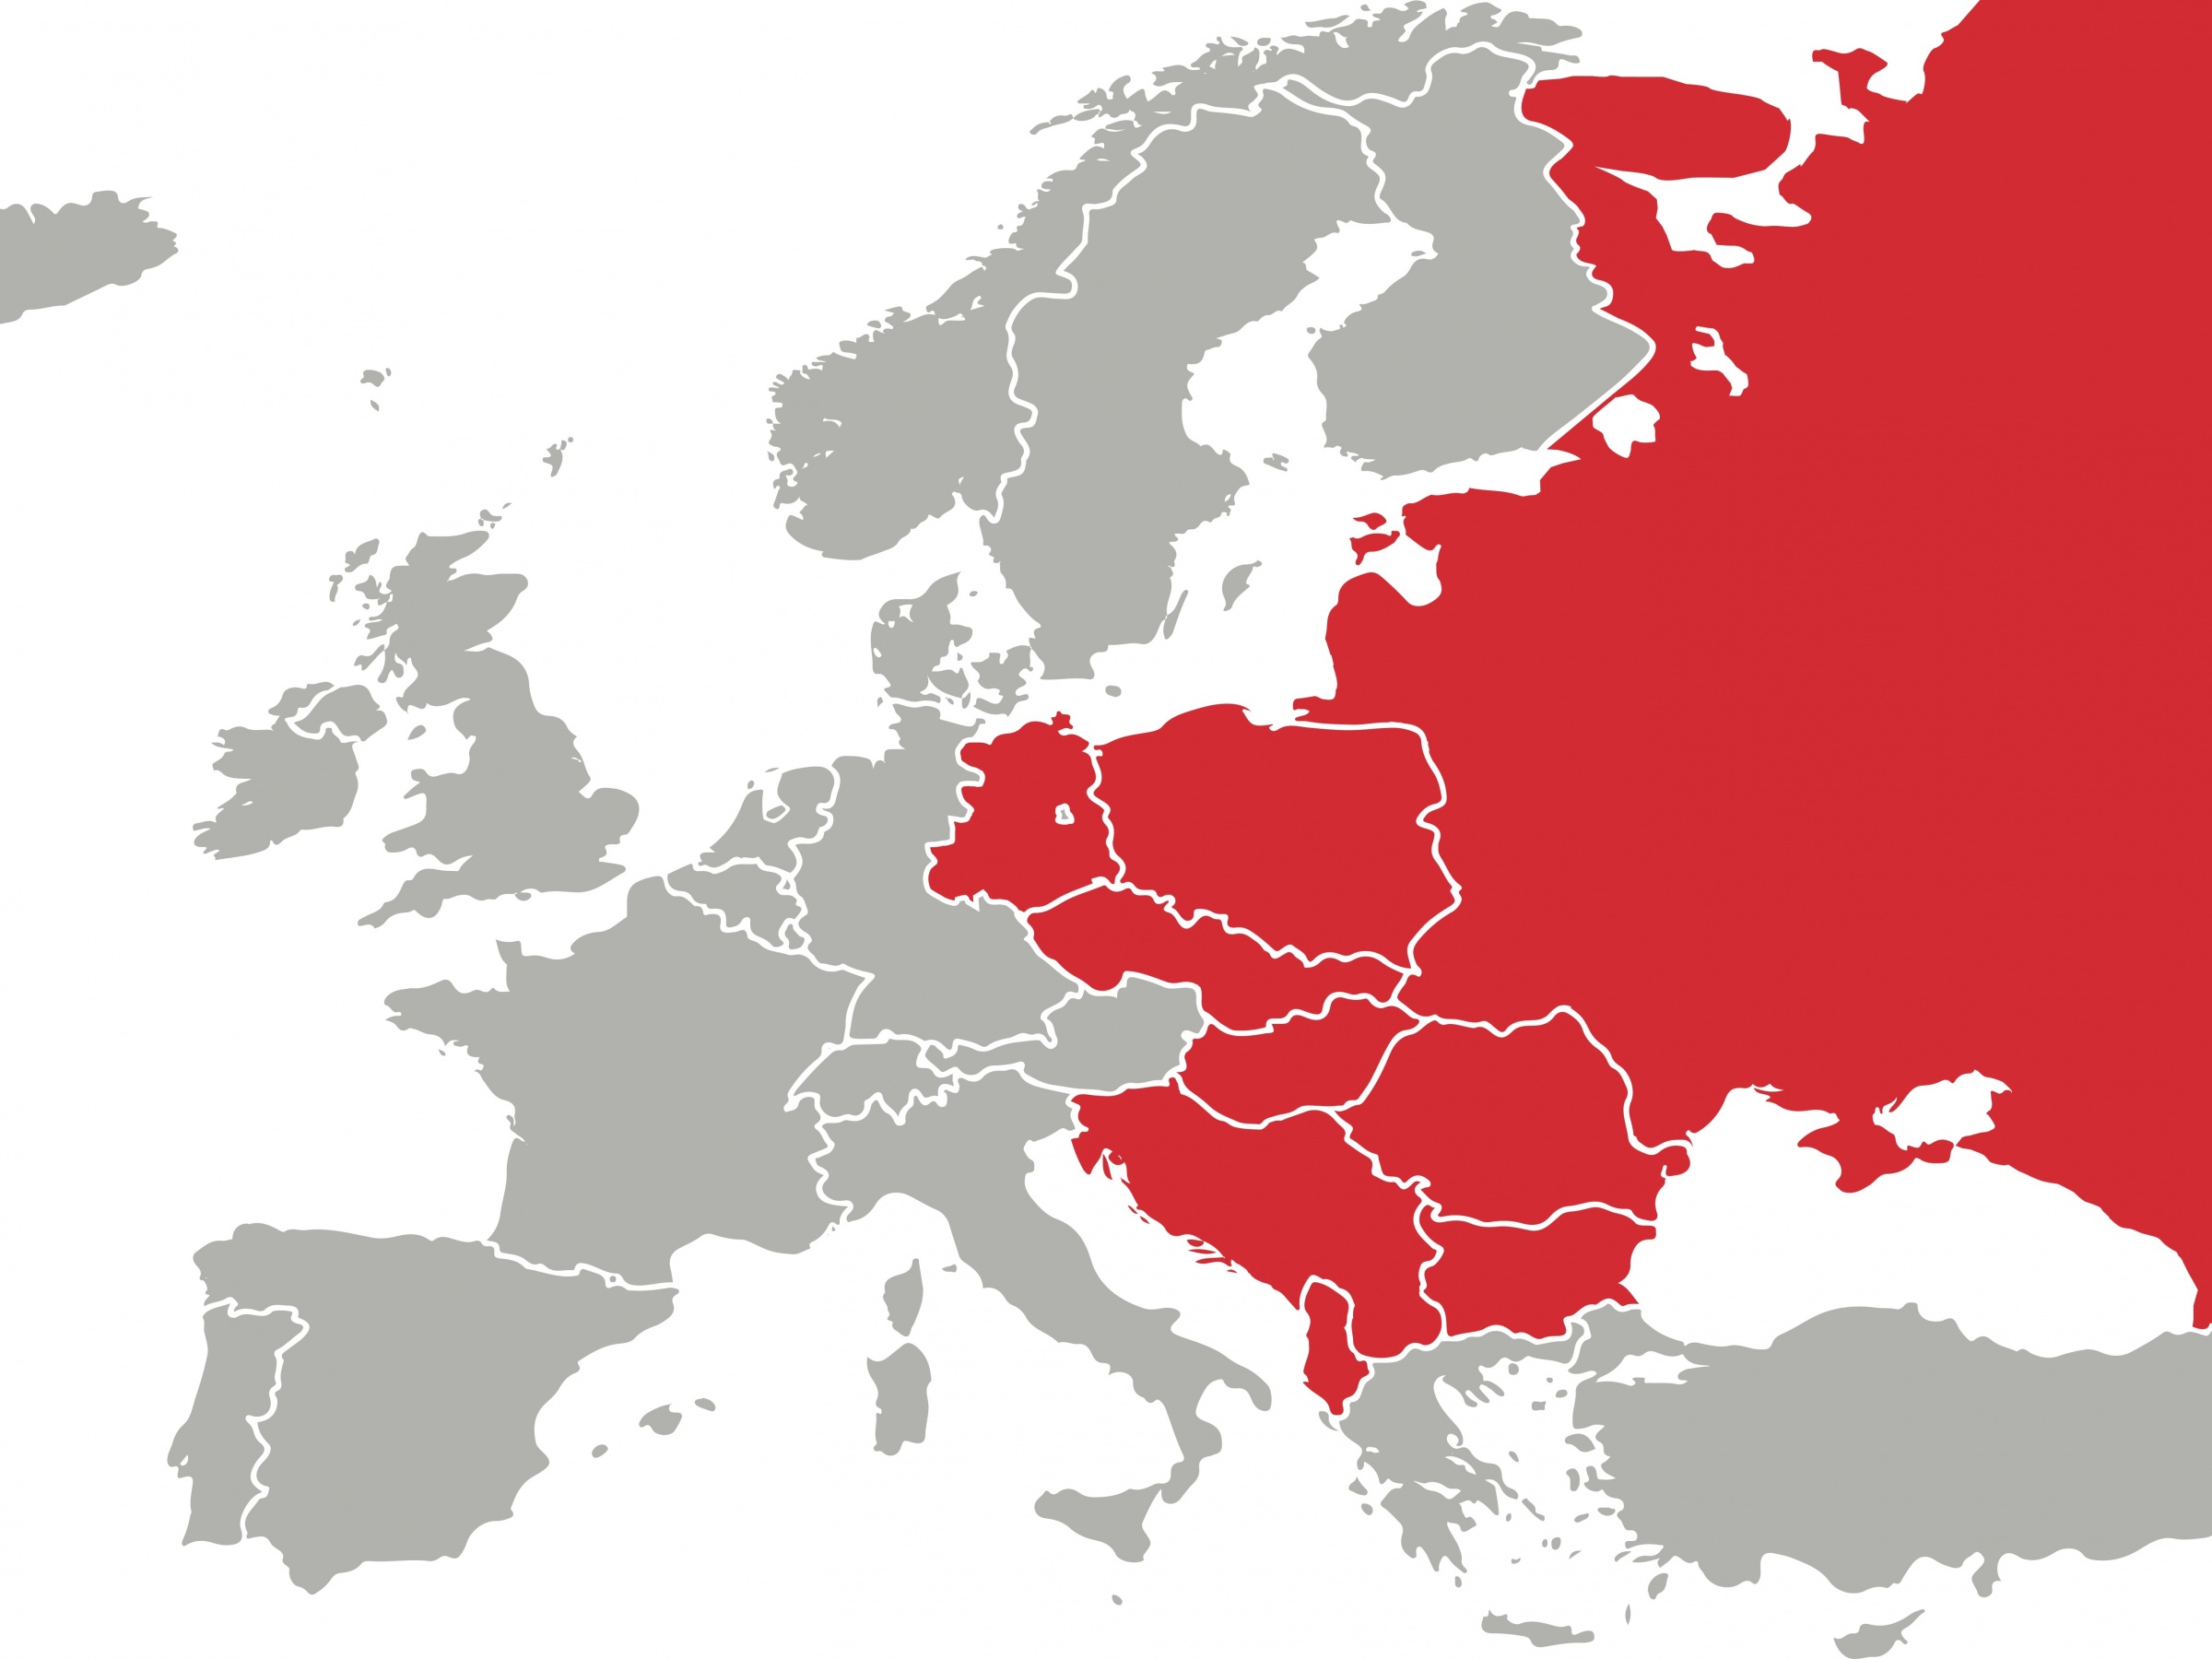 Европа железный занавес. Железный занавес в Европе. Железный занавес карта. Железный занавес в СССР. Iron Curtain карта.